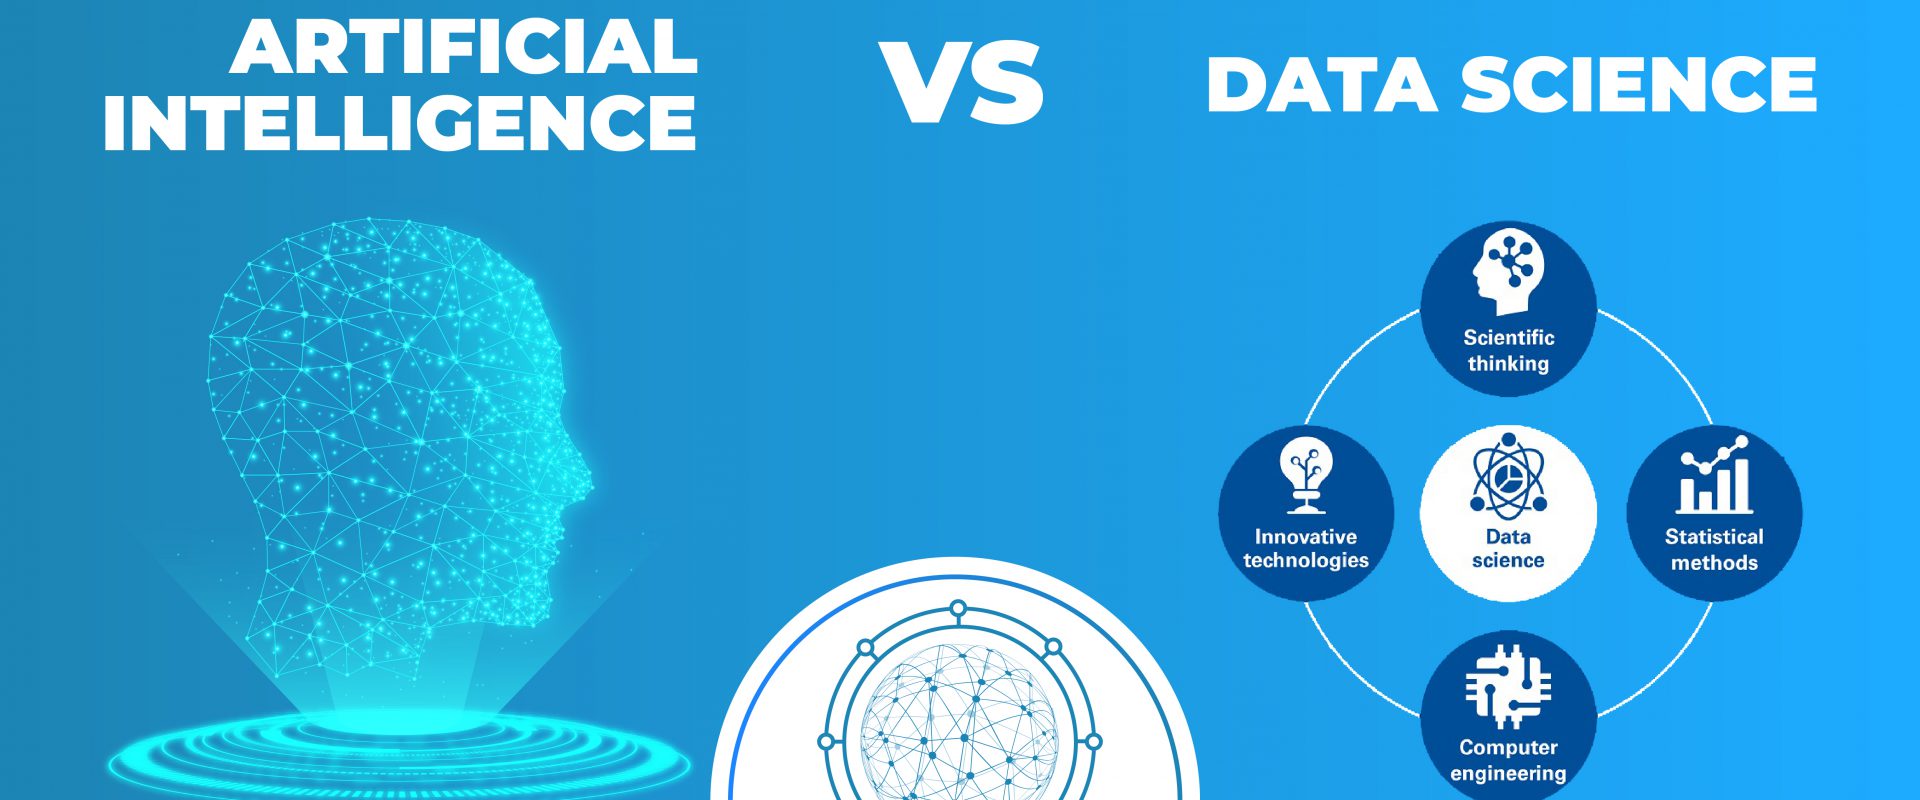 Data Science VS Artificial Intelligence